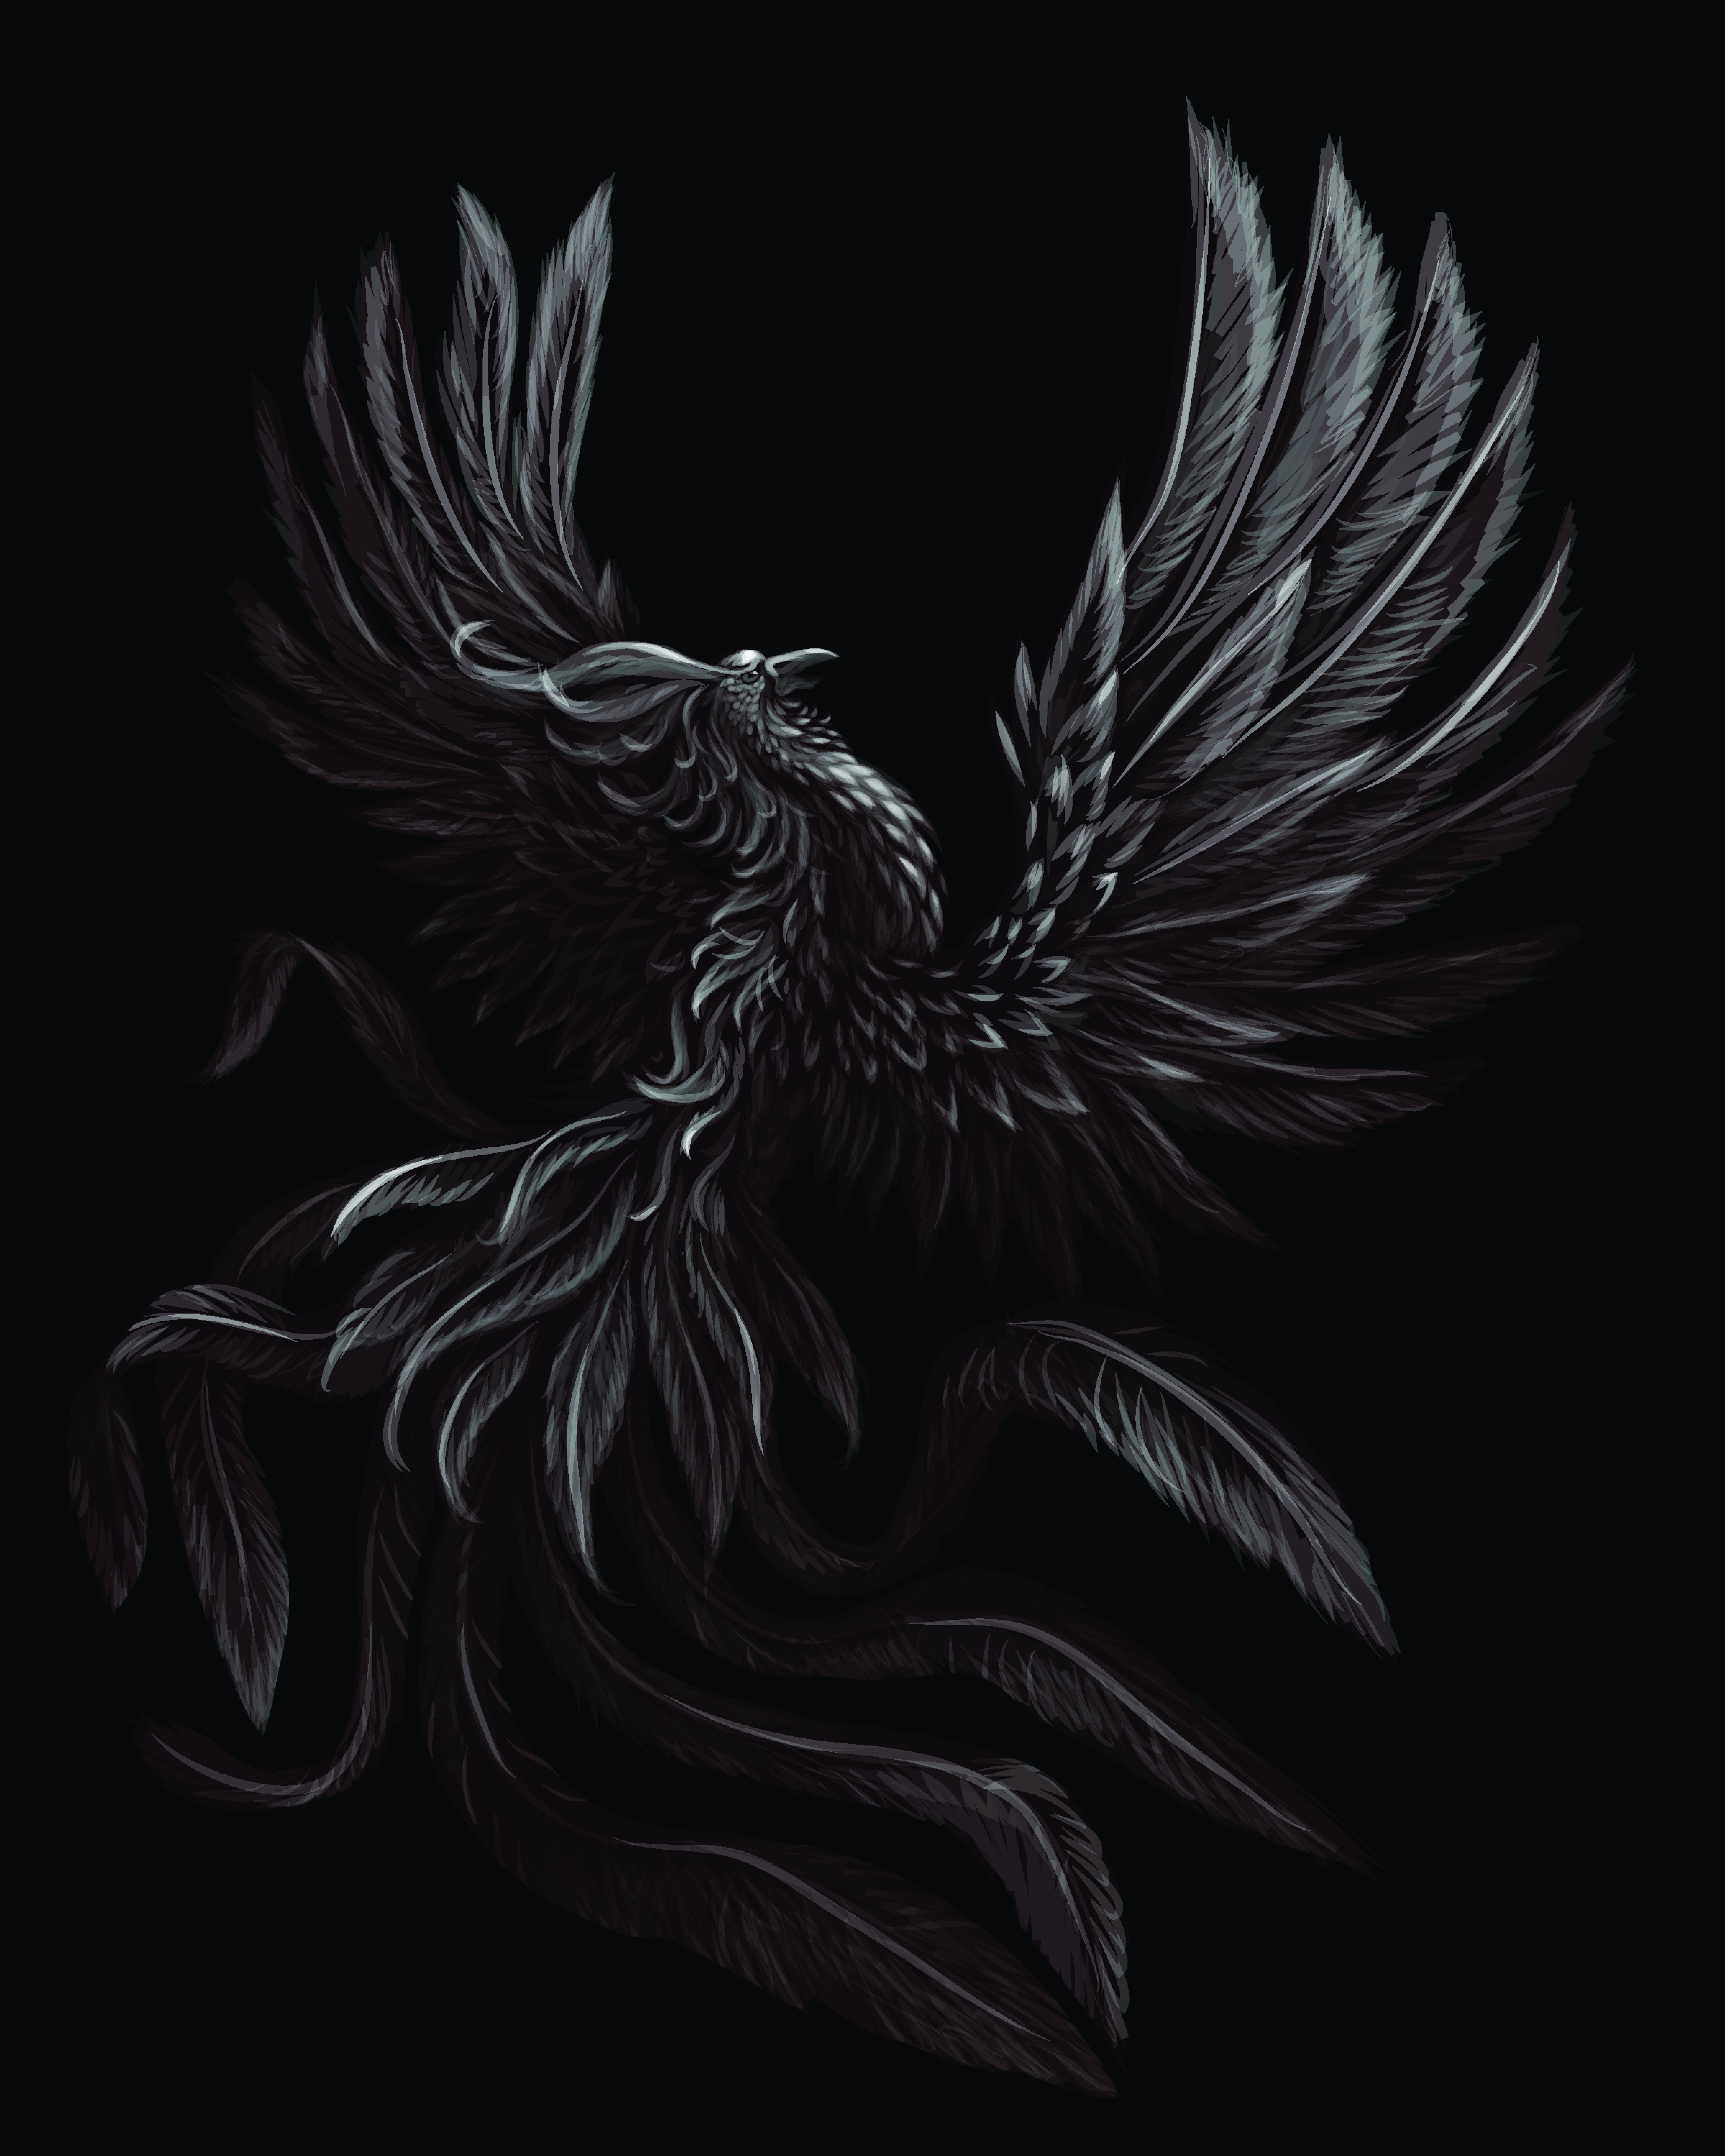 Shadow Phoenix - Black Phoenix of Protection Reiki